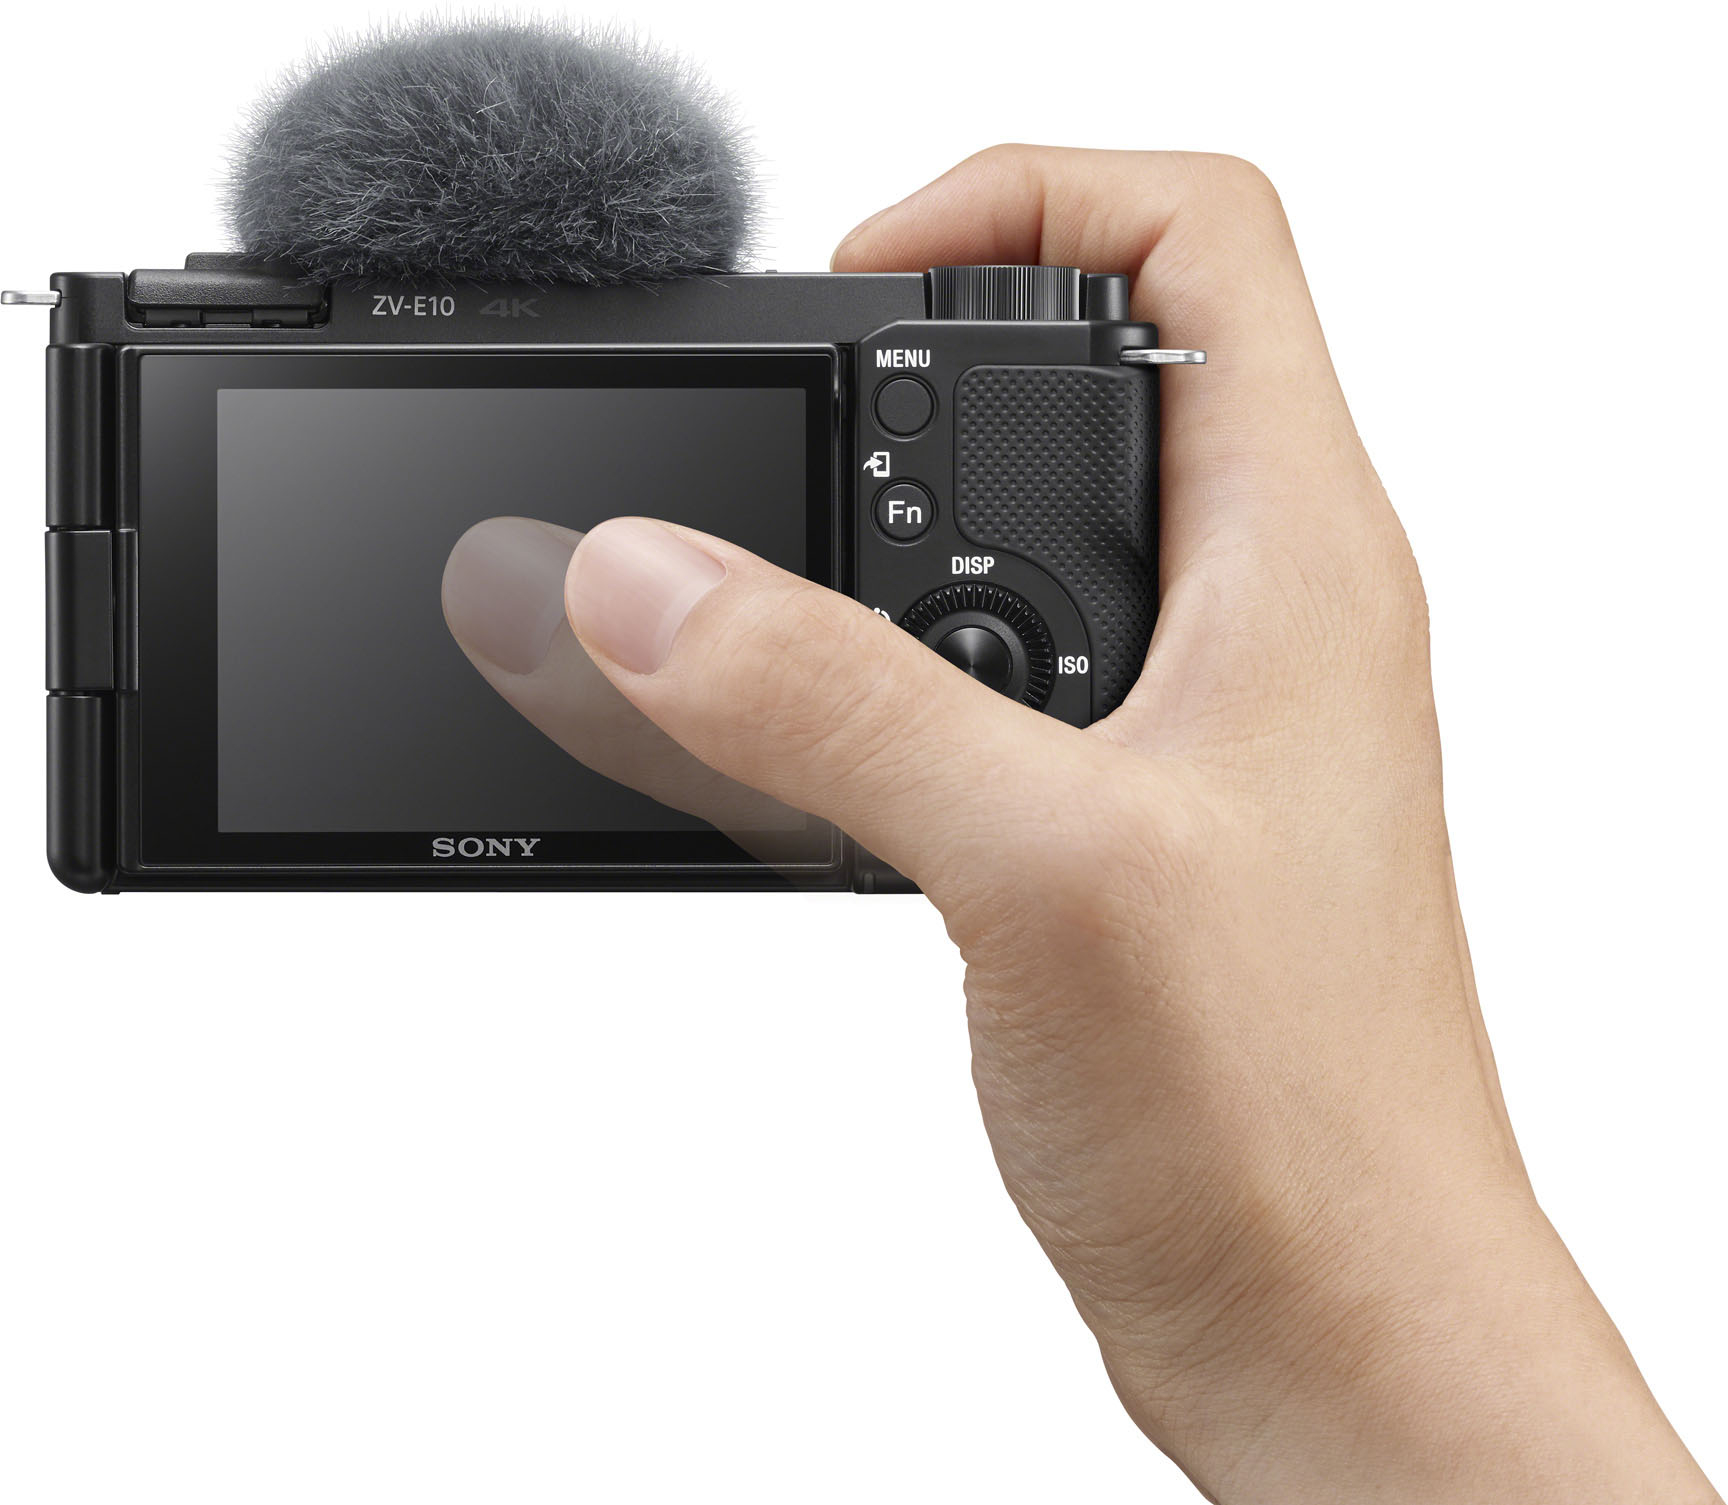 Kit 16-50mm ILCZVE10L/B Mirrorless Sony Best Buy with Black Lens Alpha Vlog ZV-E10 - Camera